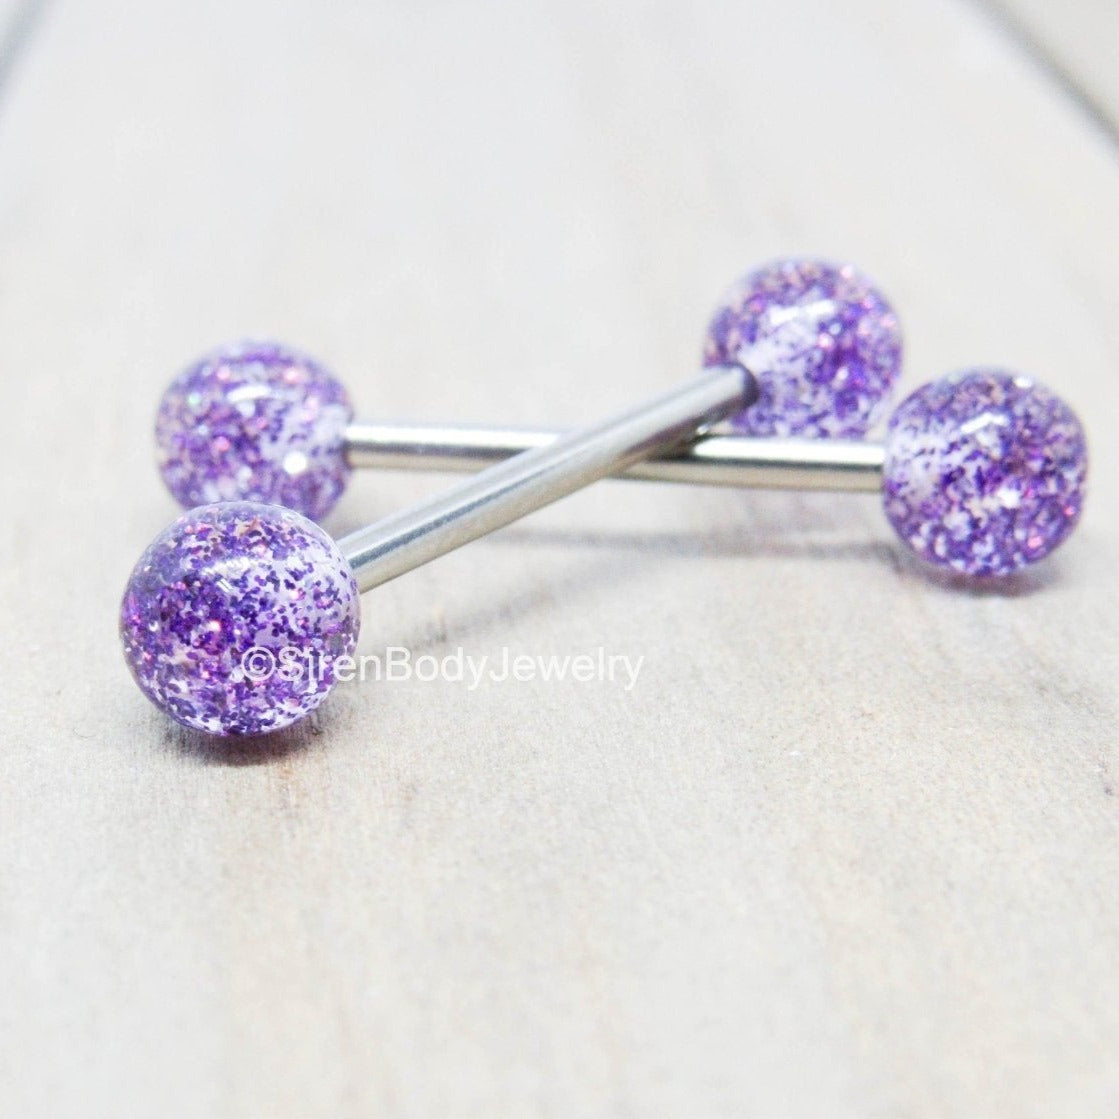 14g purple glitter ball nipple piercing rings